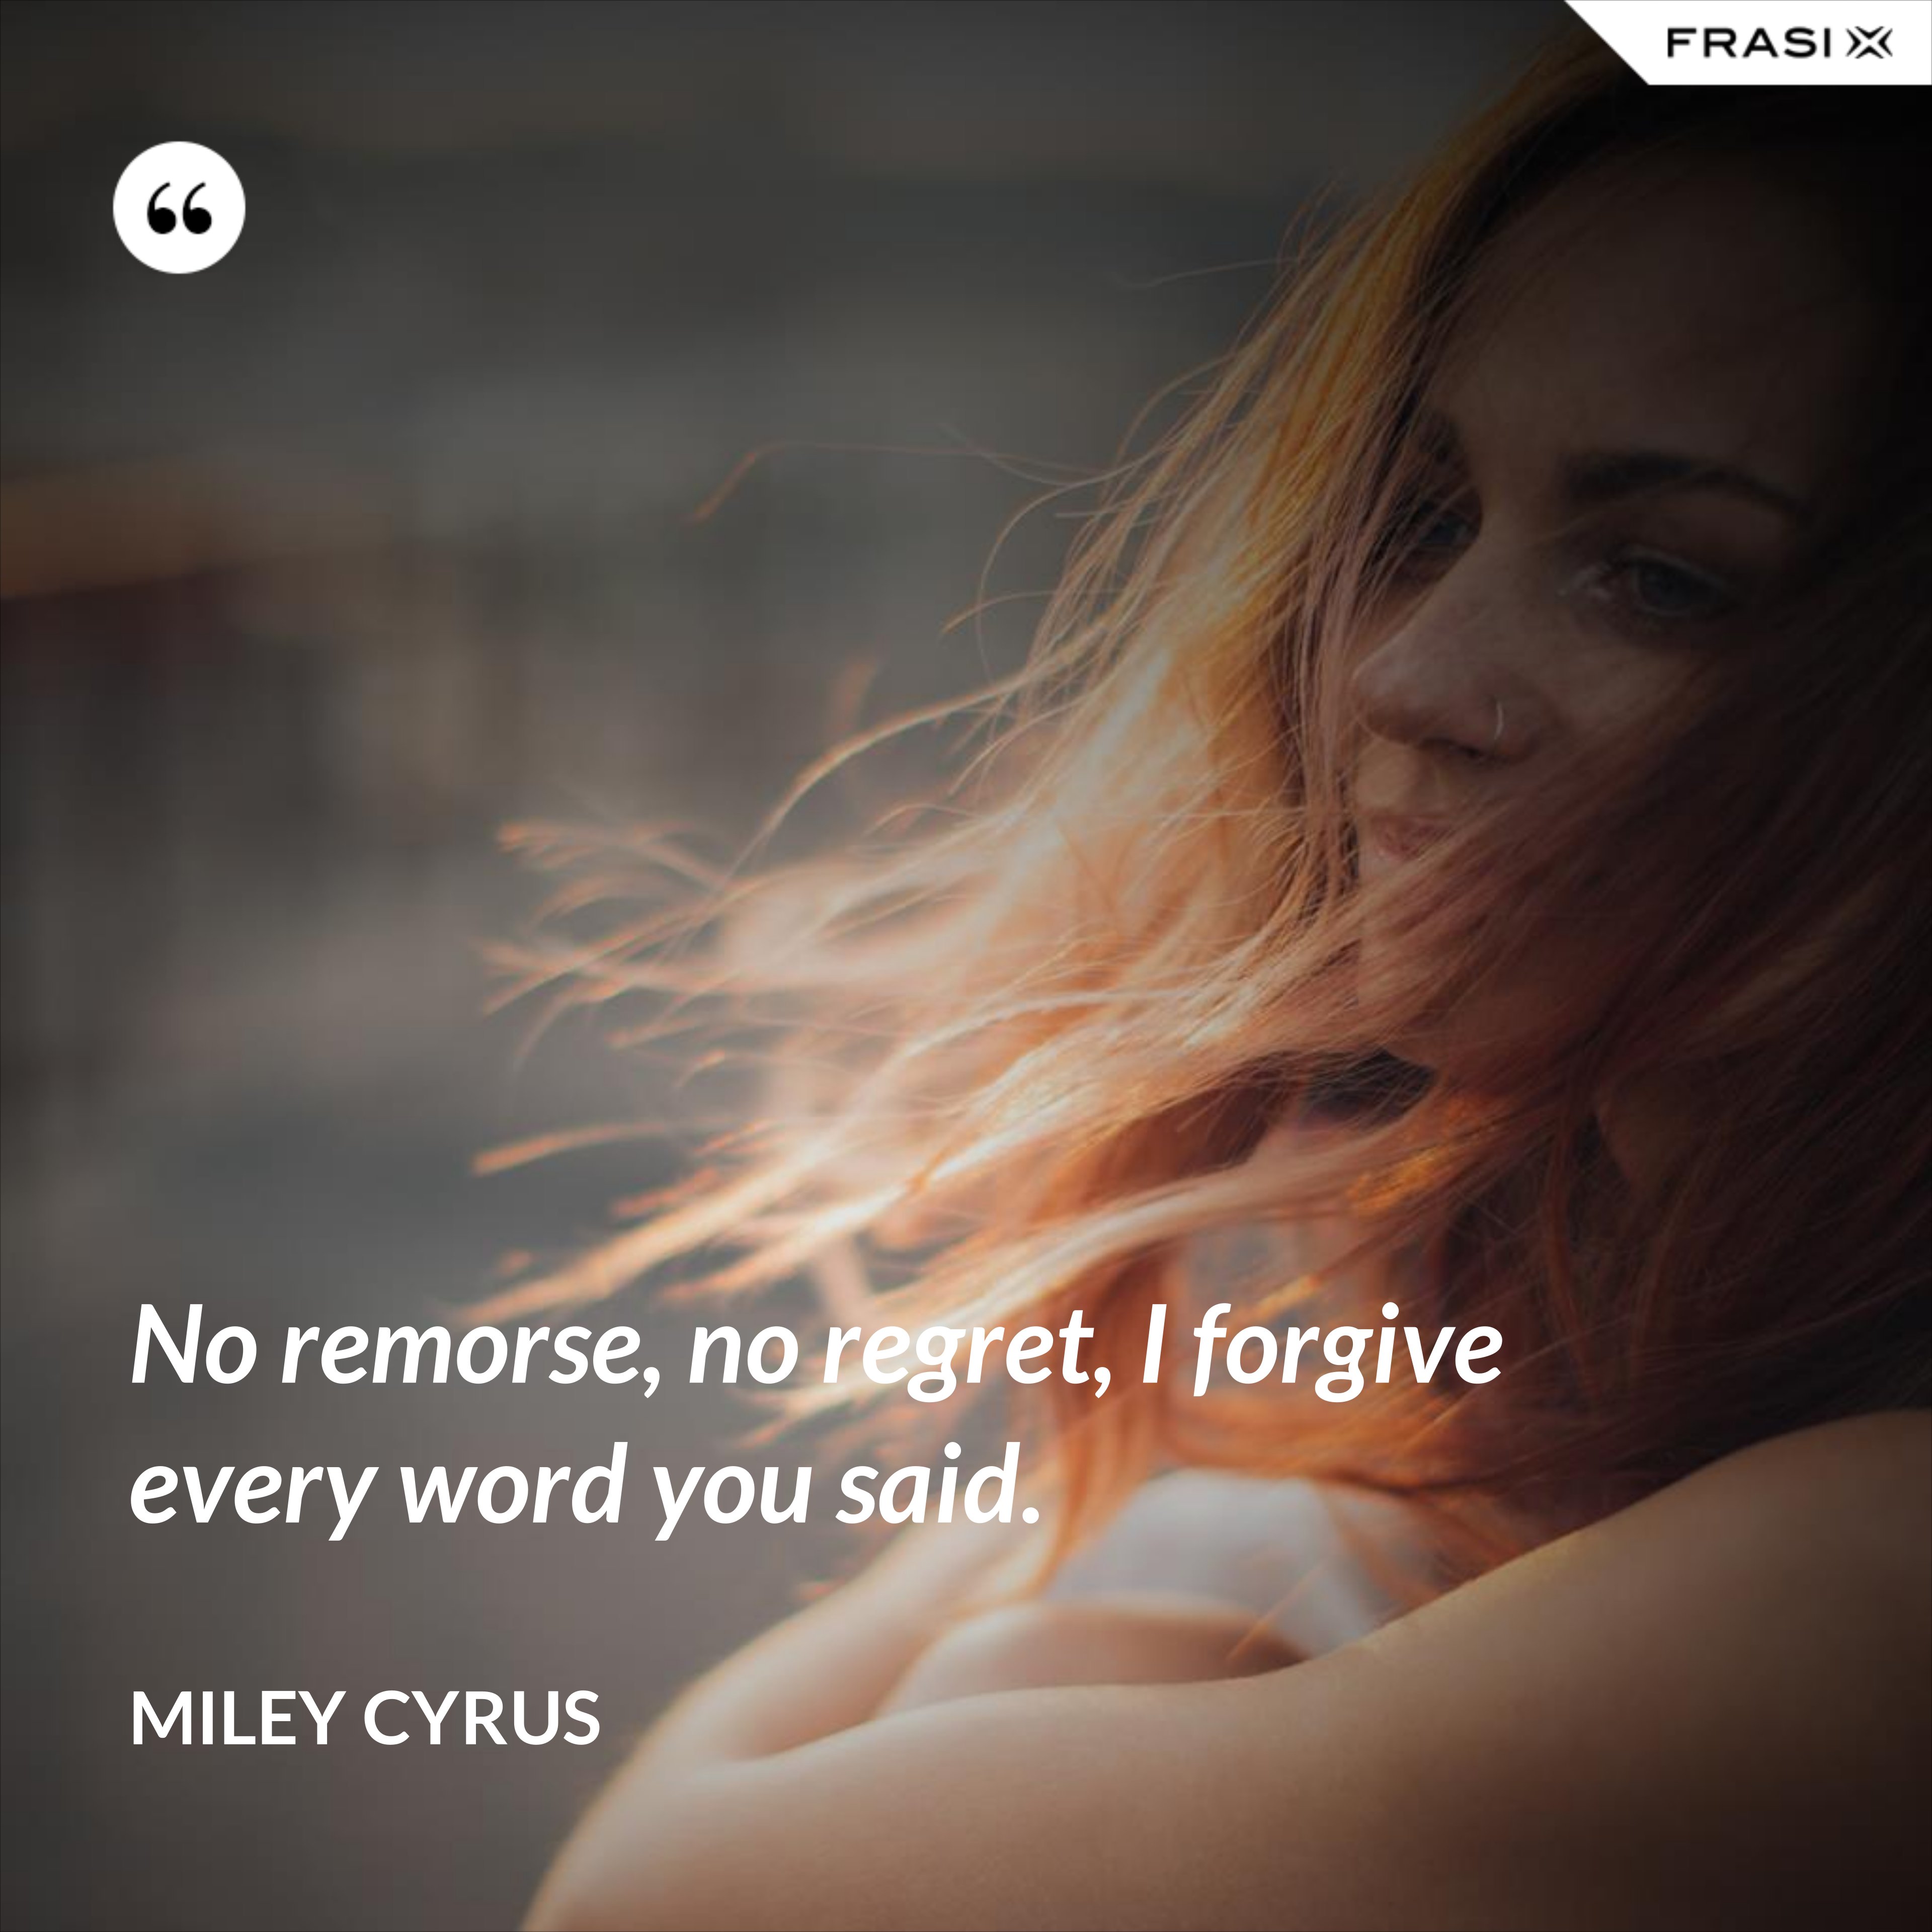 No remorse, no regret, I forgive every word you said. - Miley Cyrus